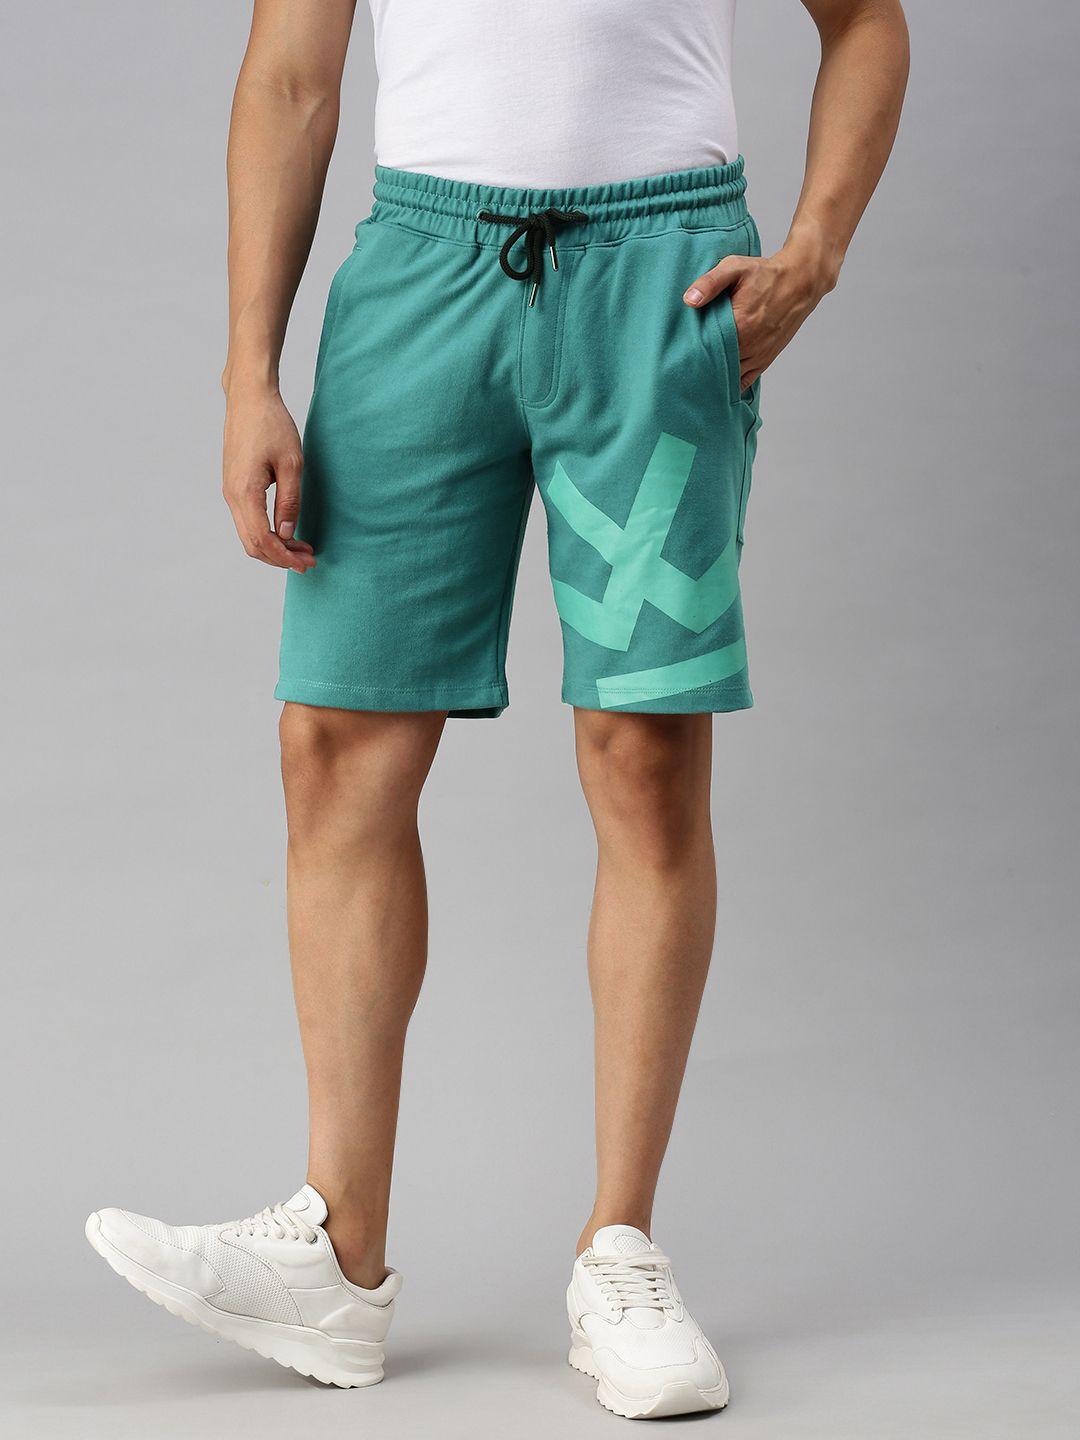 wrogn men teal green brand logo printed mid-rise regular shorts